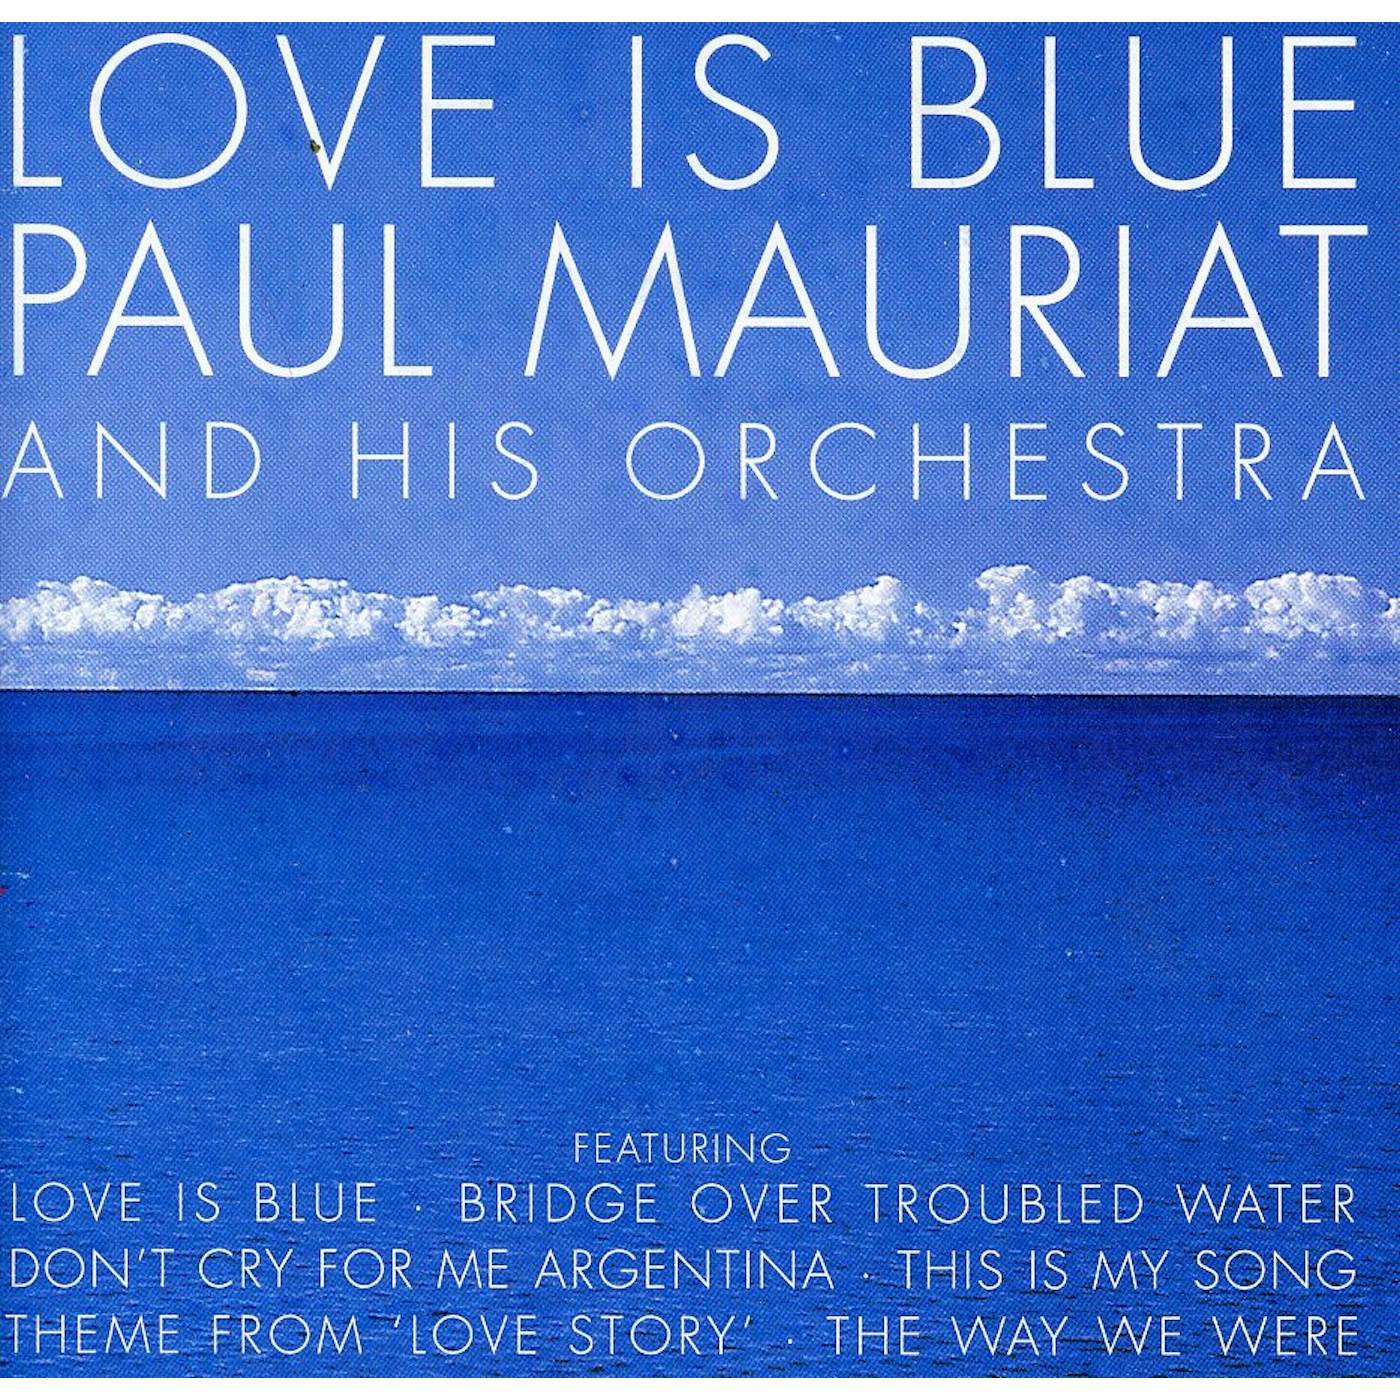 Paul Mauriat LOVE IS BLUE CD